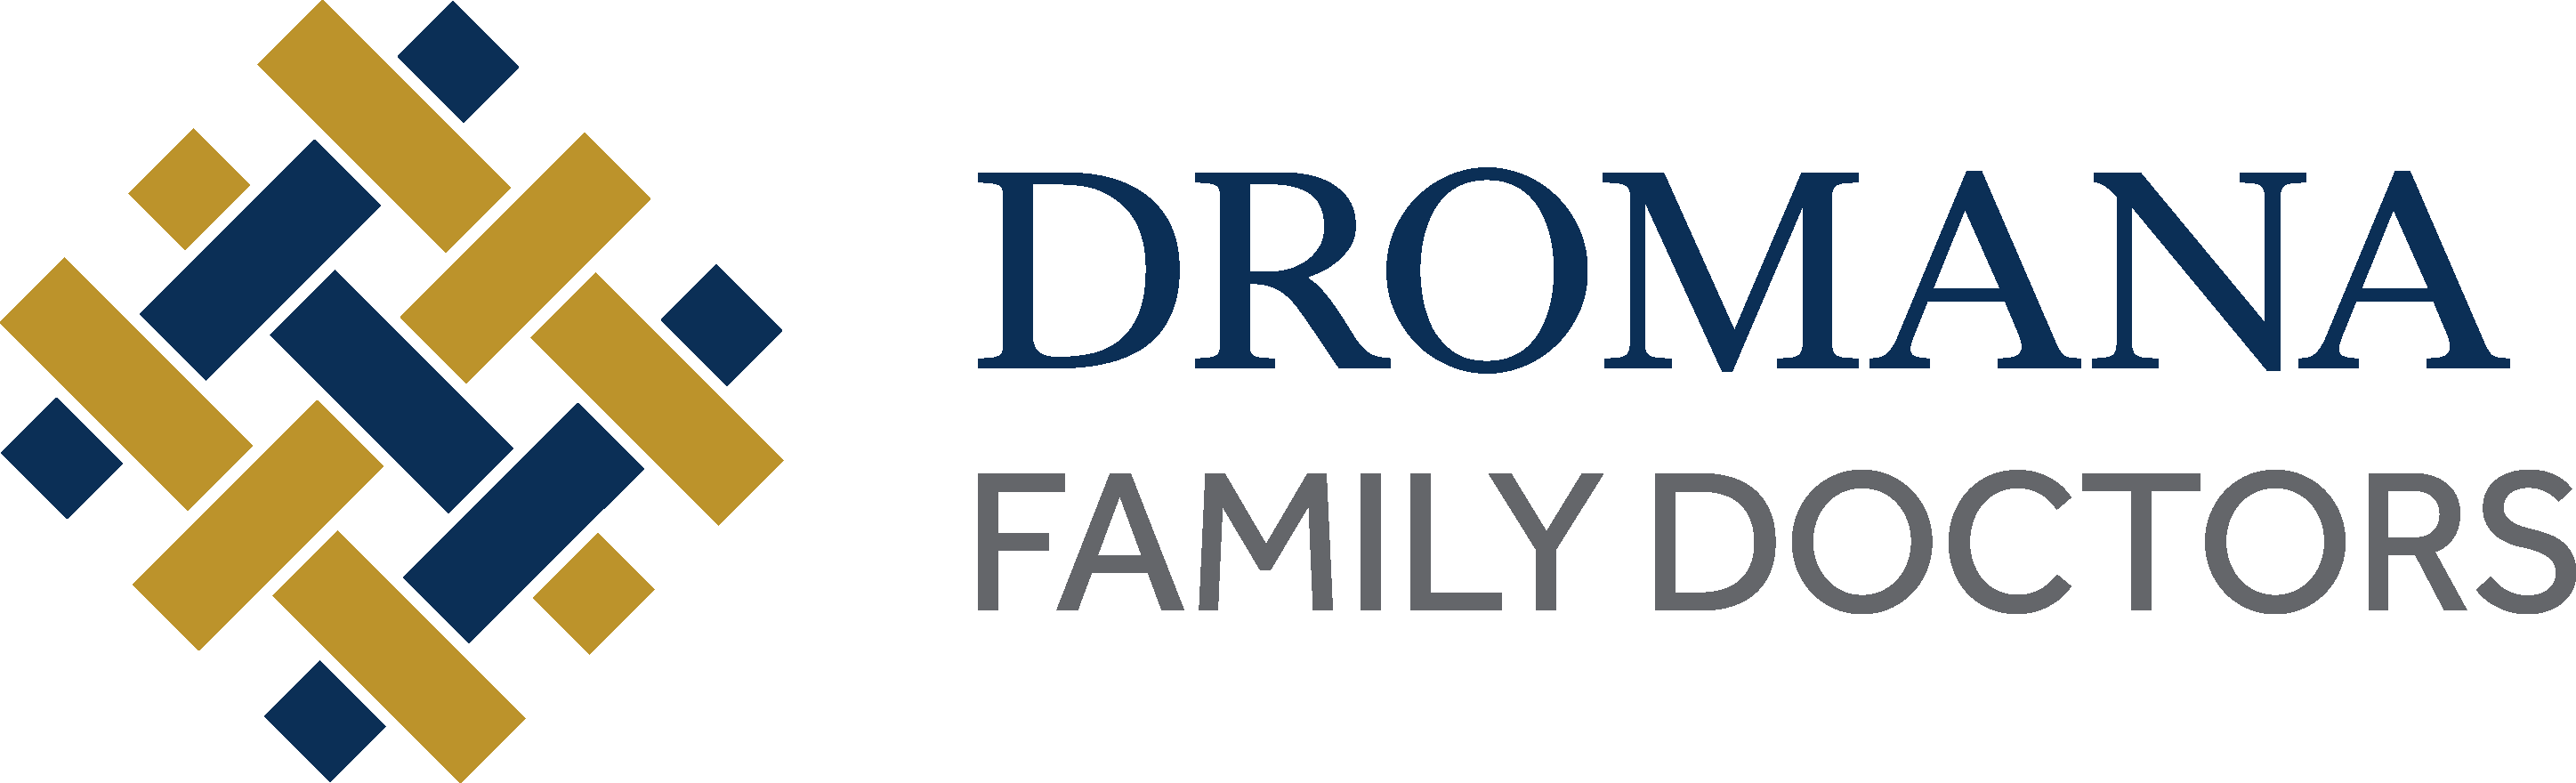 Dromana Family Doctors